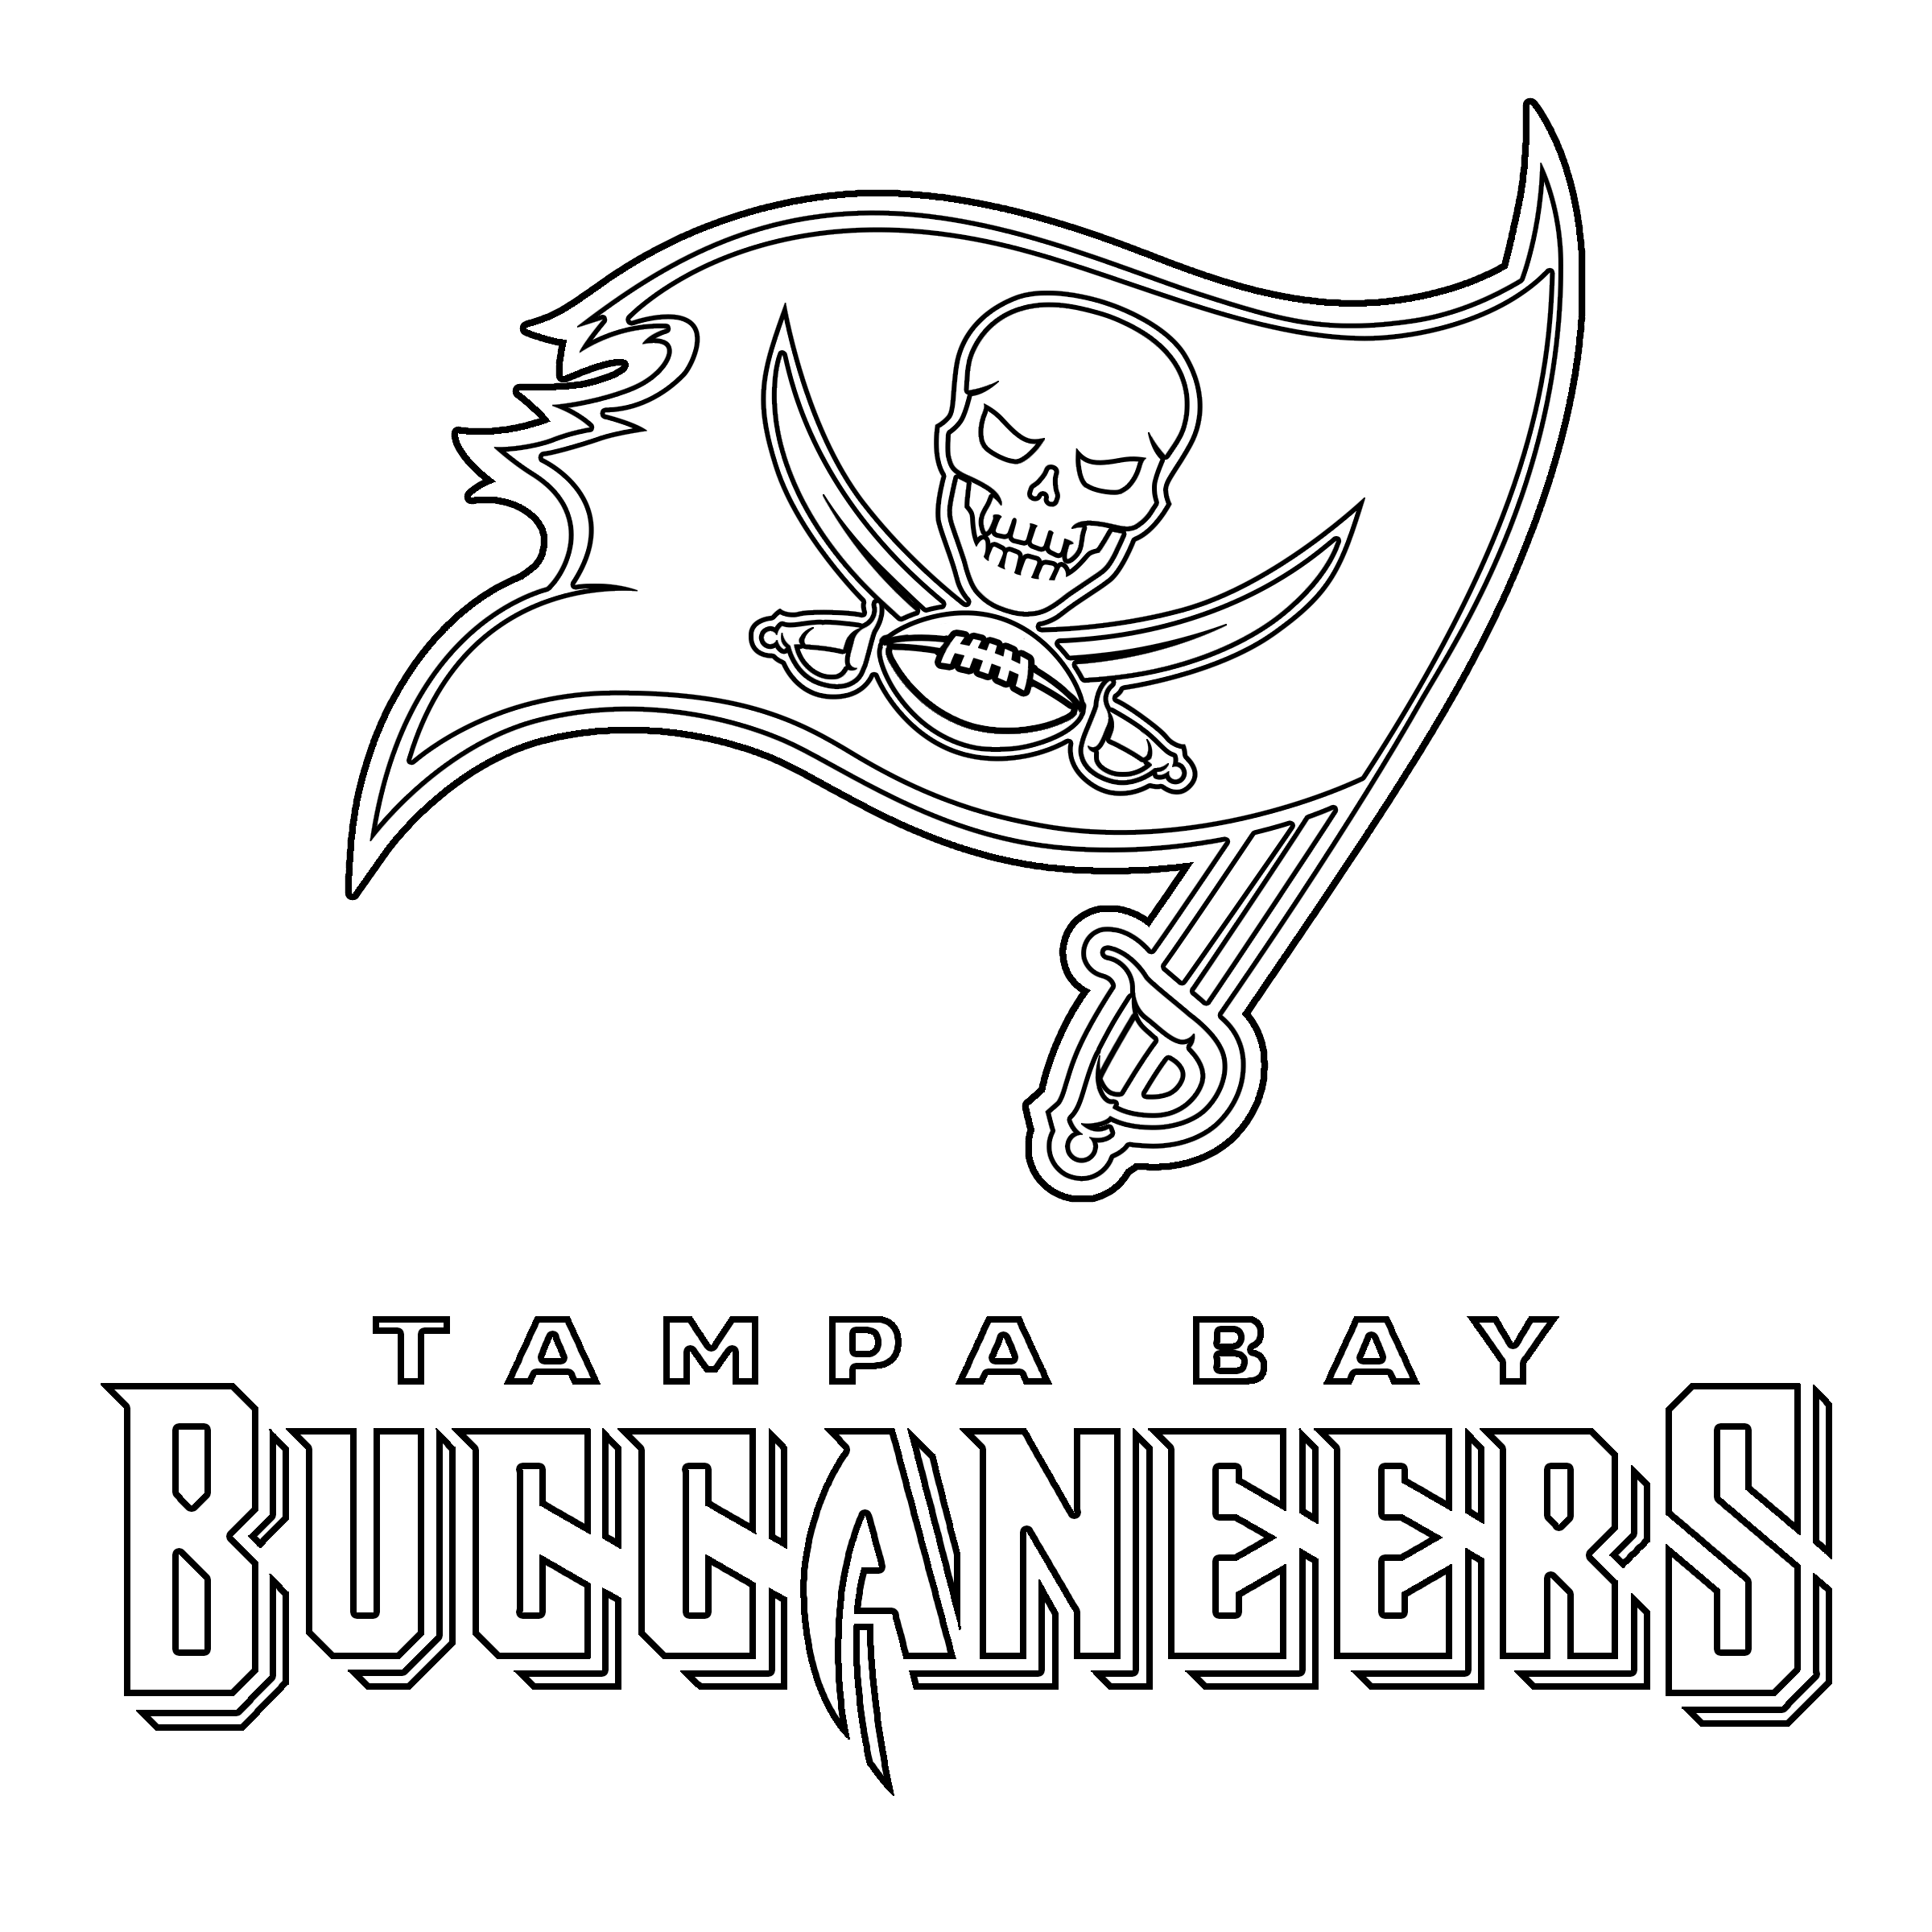 Tampa Bay Buccaneers Logo - Tampa Bay Buccaneers Logo PNG Transparent & SVG Vector - Freebie Supply